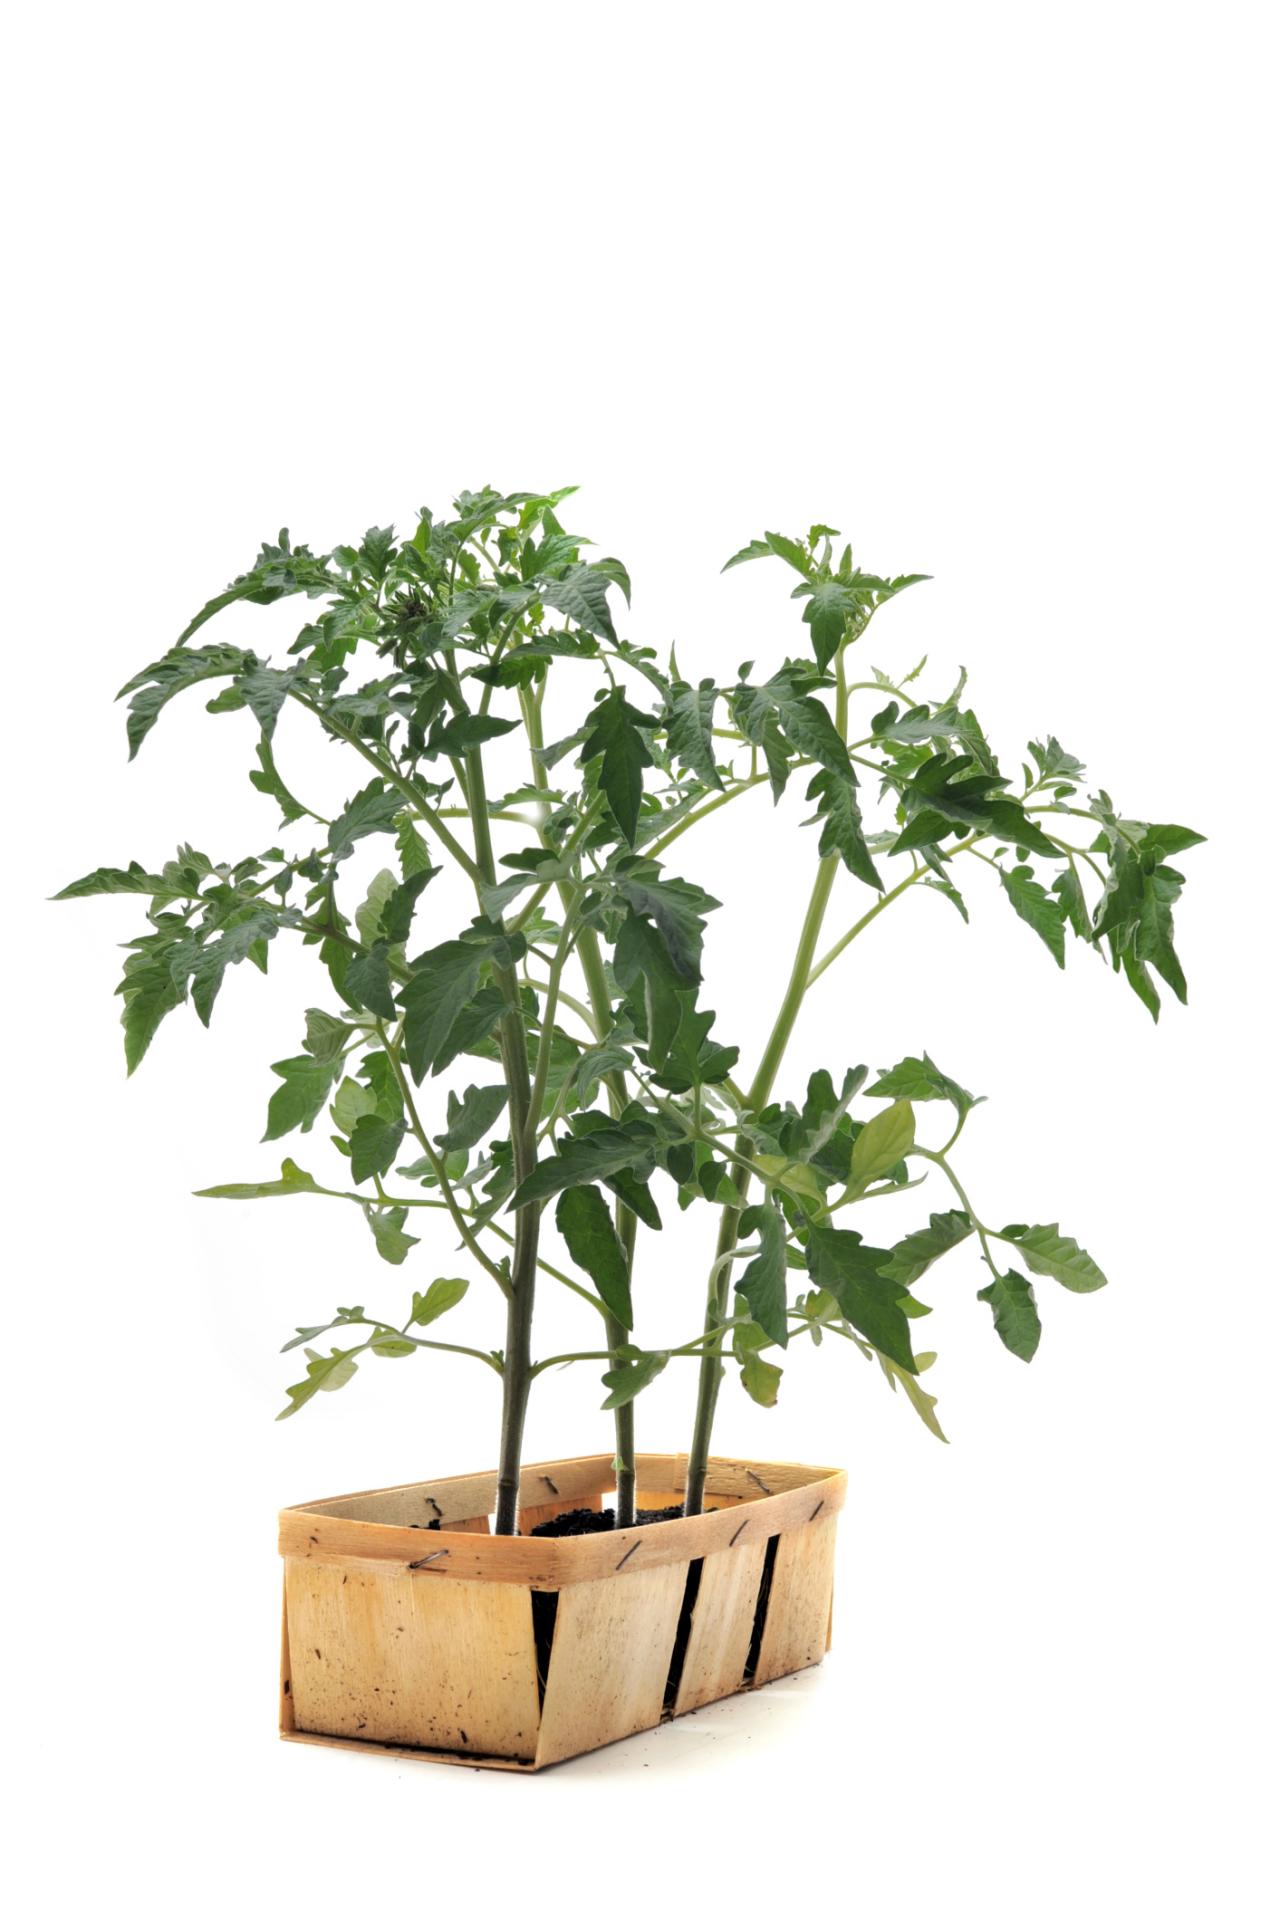 Indoor frpwing tomatoe plants